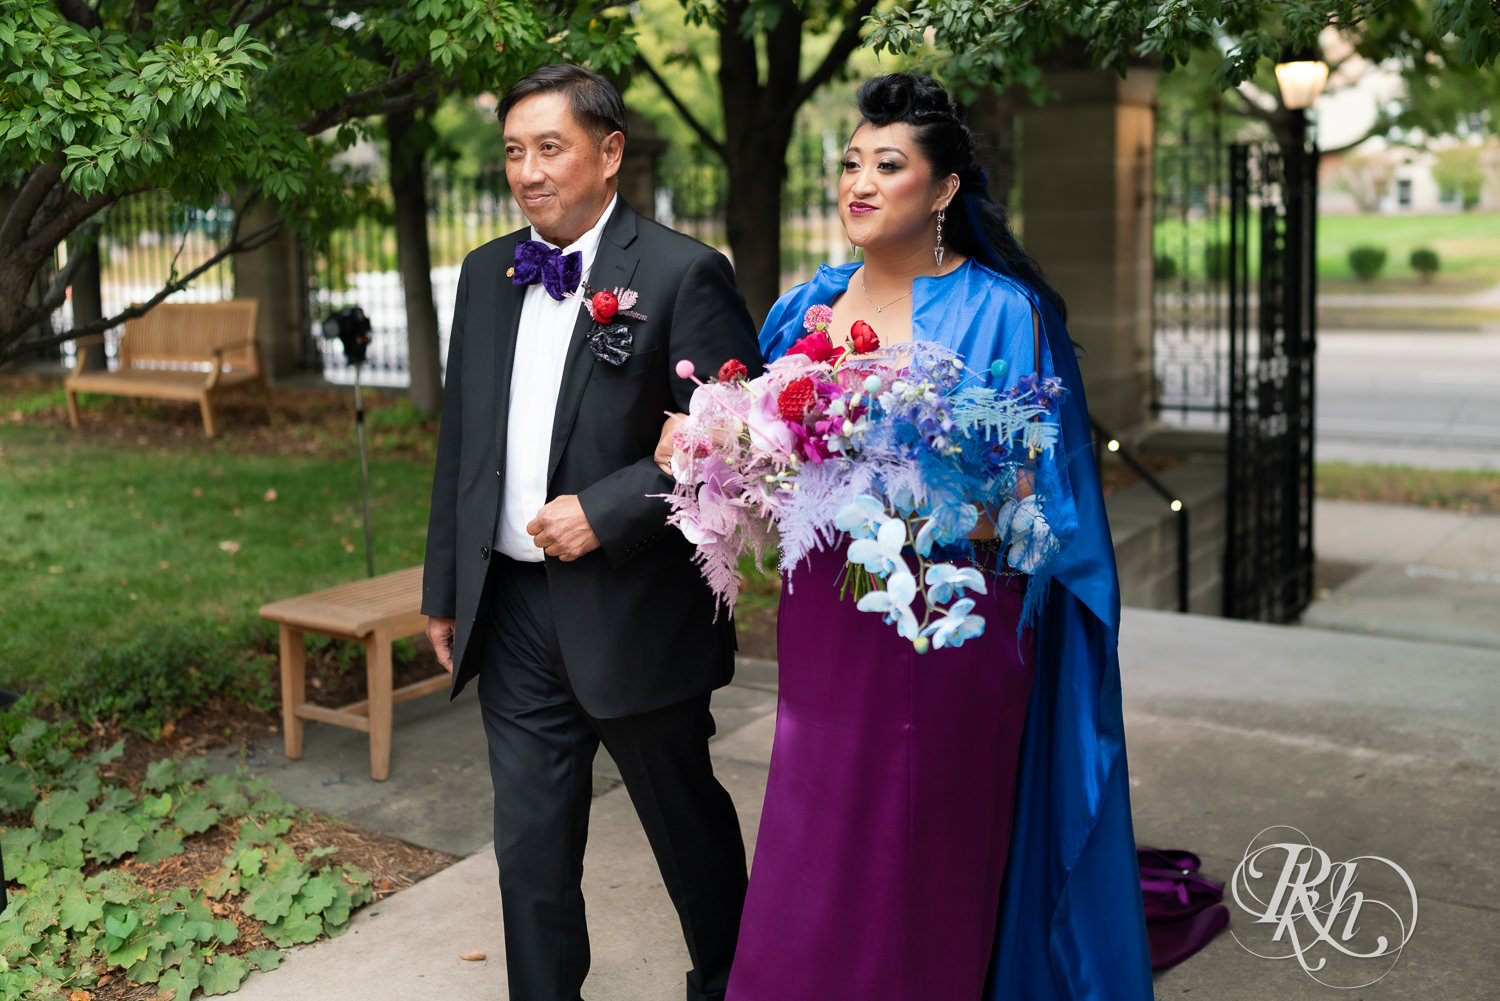 Filipino bride in purple wedding dress walks down the aisle at the American Swedish Institute in Minneapolis, Minnesota.